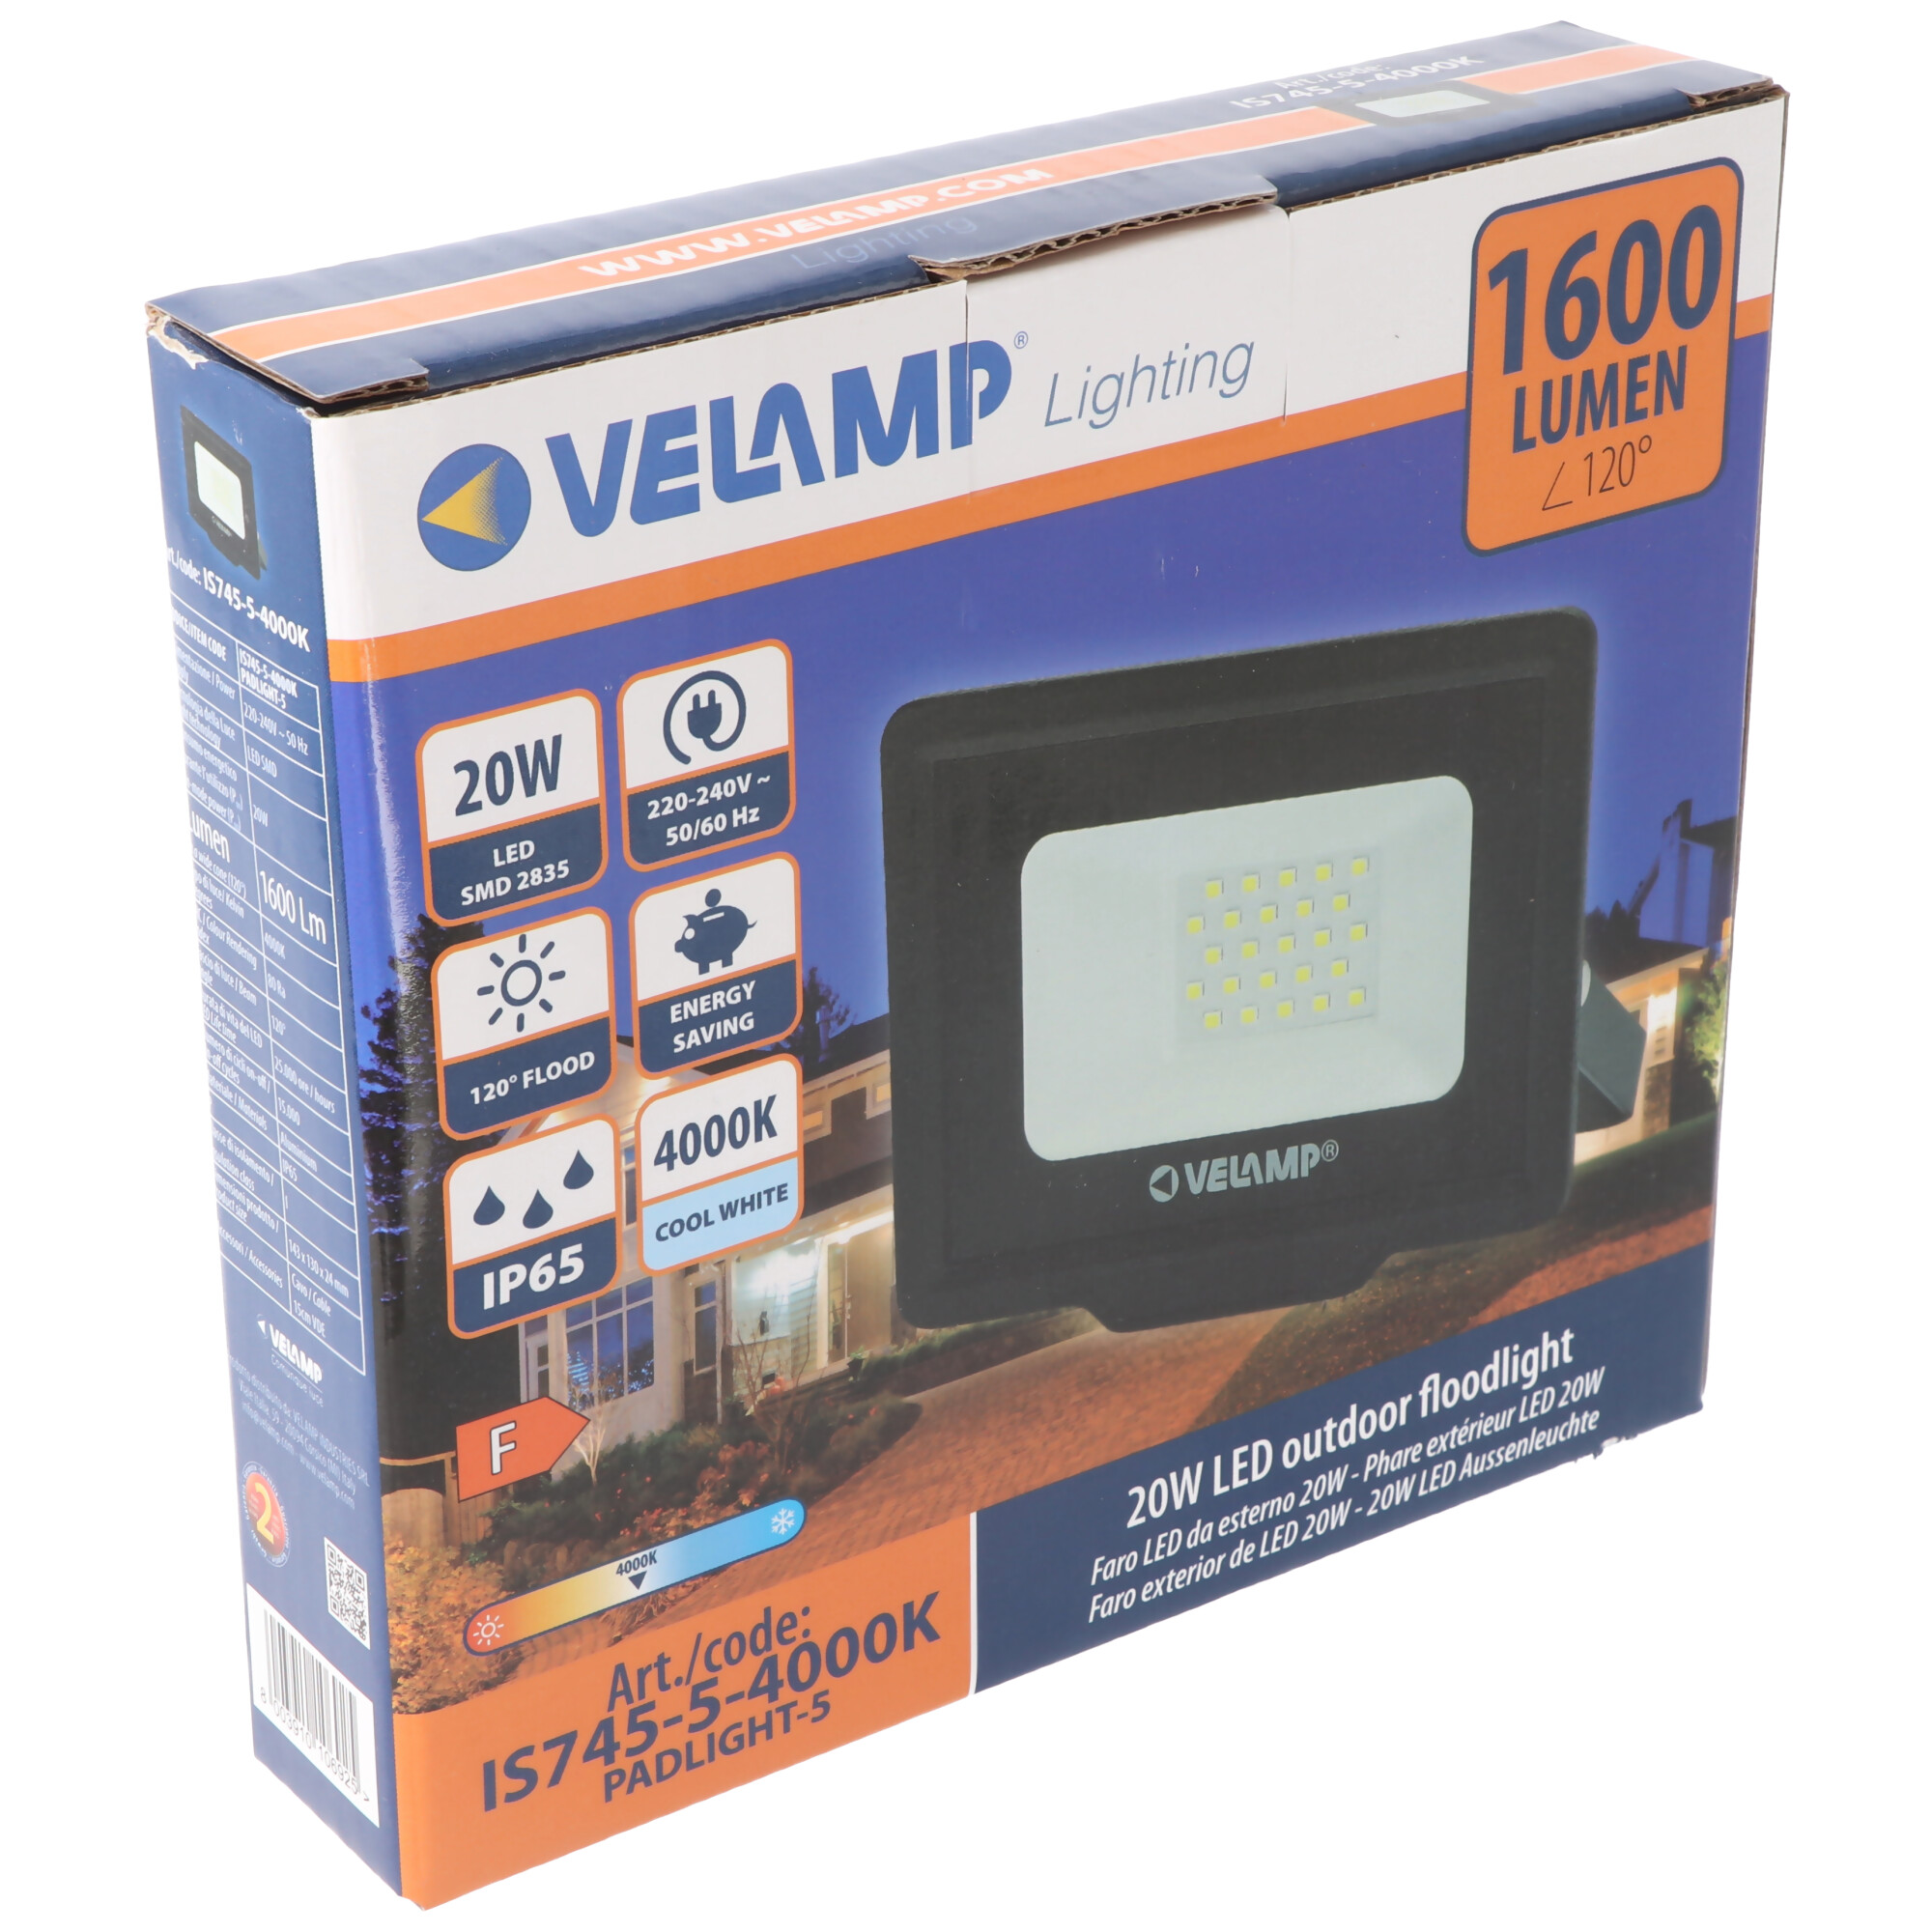 Velamp PADLIGHT5, SMD LED Strahler, 20W IP65, schwarz 4000K